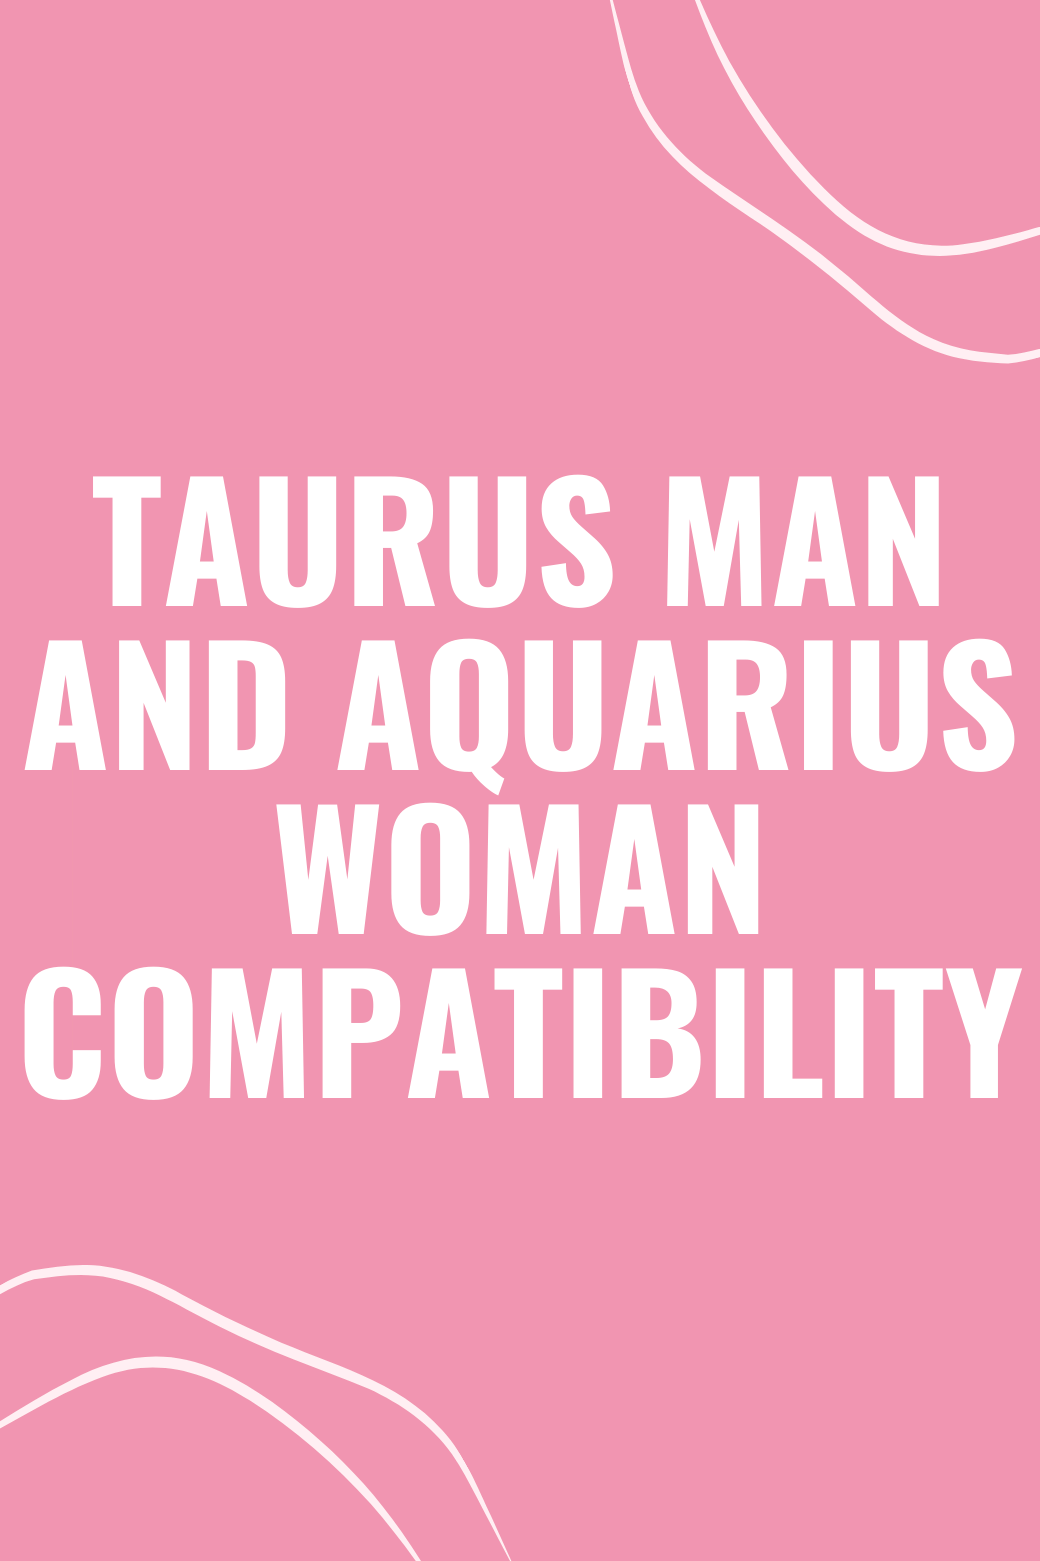 Taurus Man and Aquarius Woman Compatibility